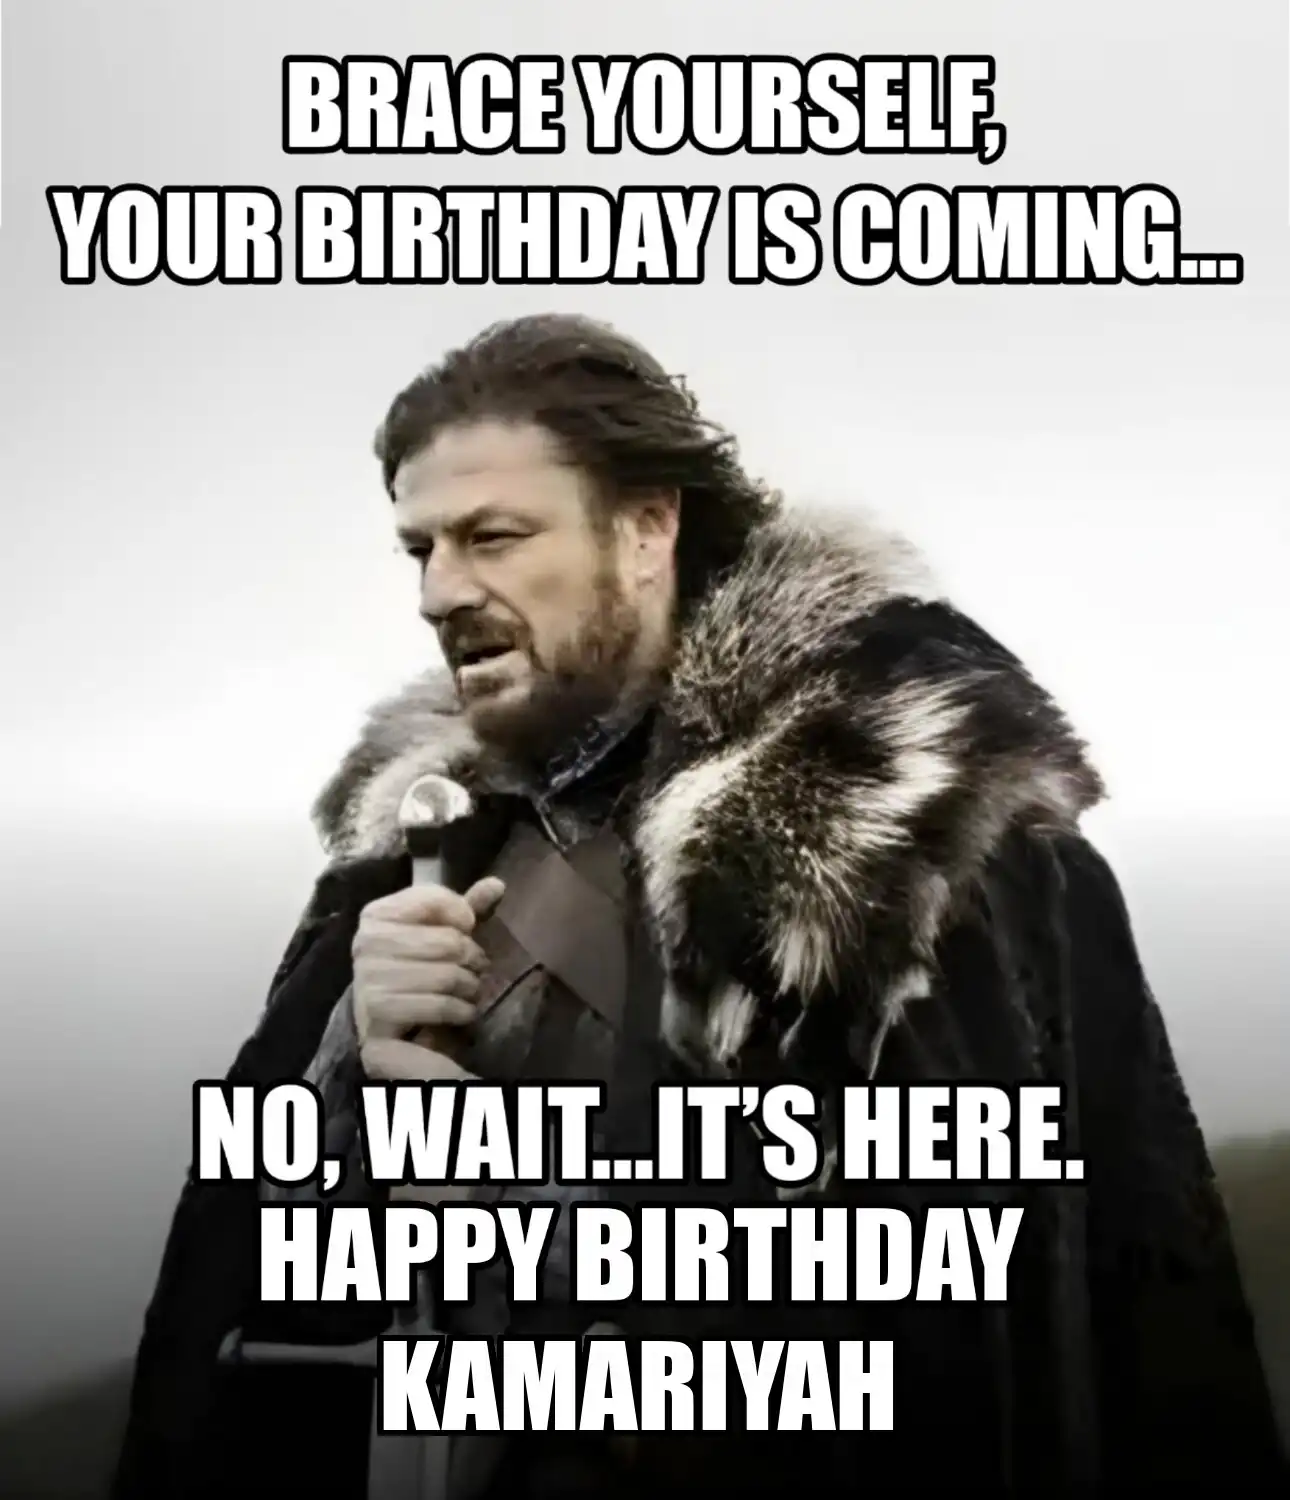 Happy Birthday Kamariyah Brace Yourself Your Birthday Is Coming Meme